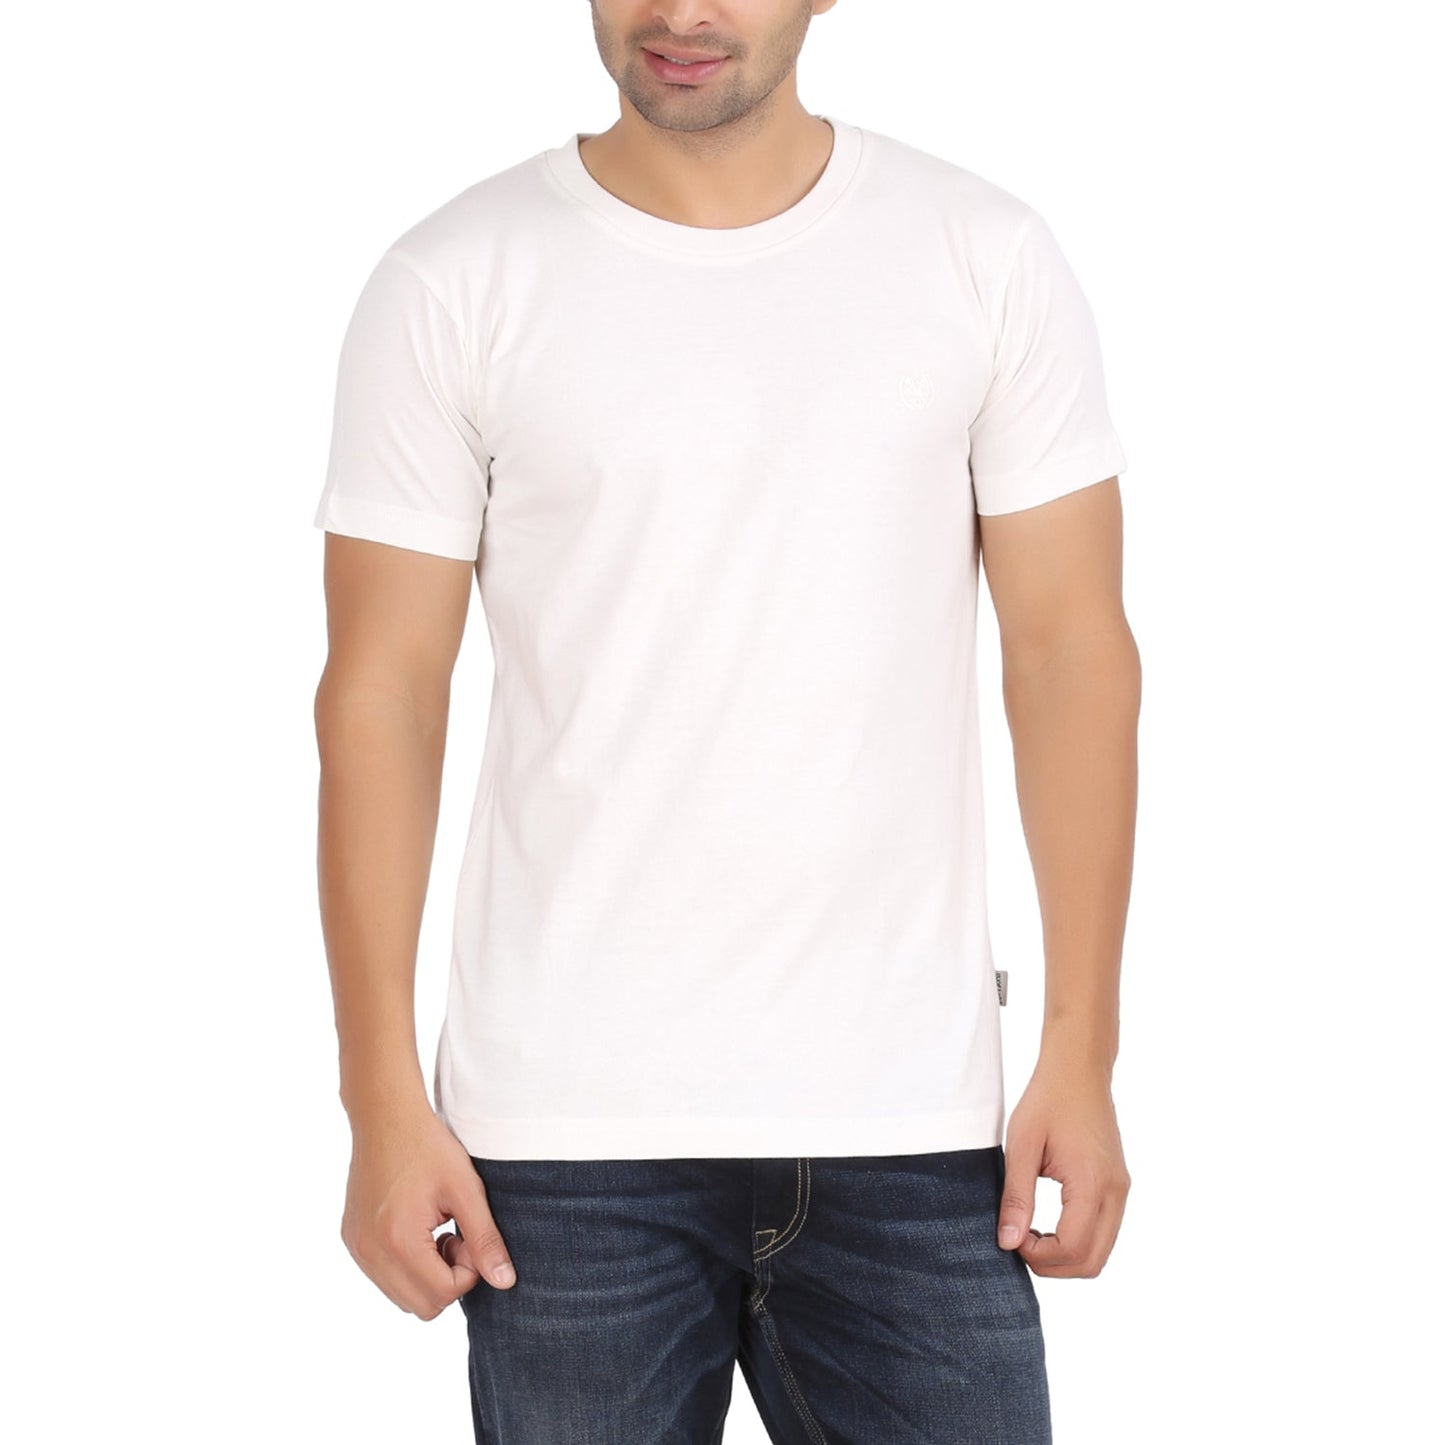 Off White Round Neck Tshirt -Style #0804